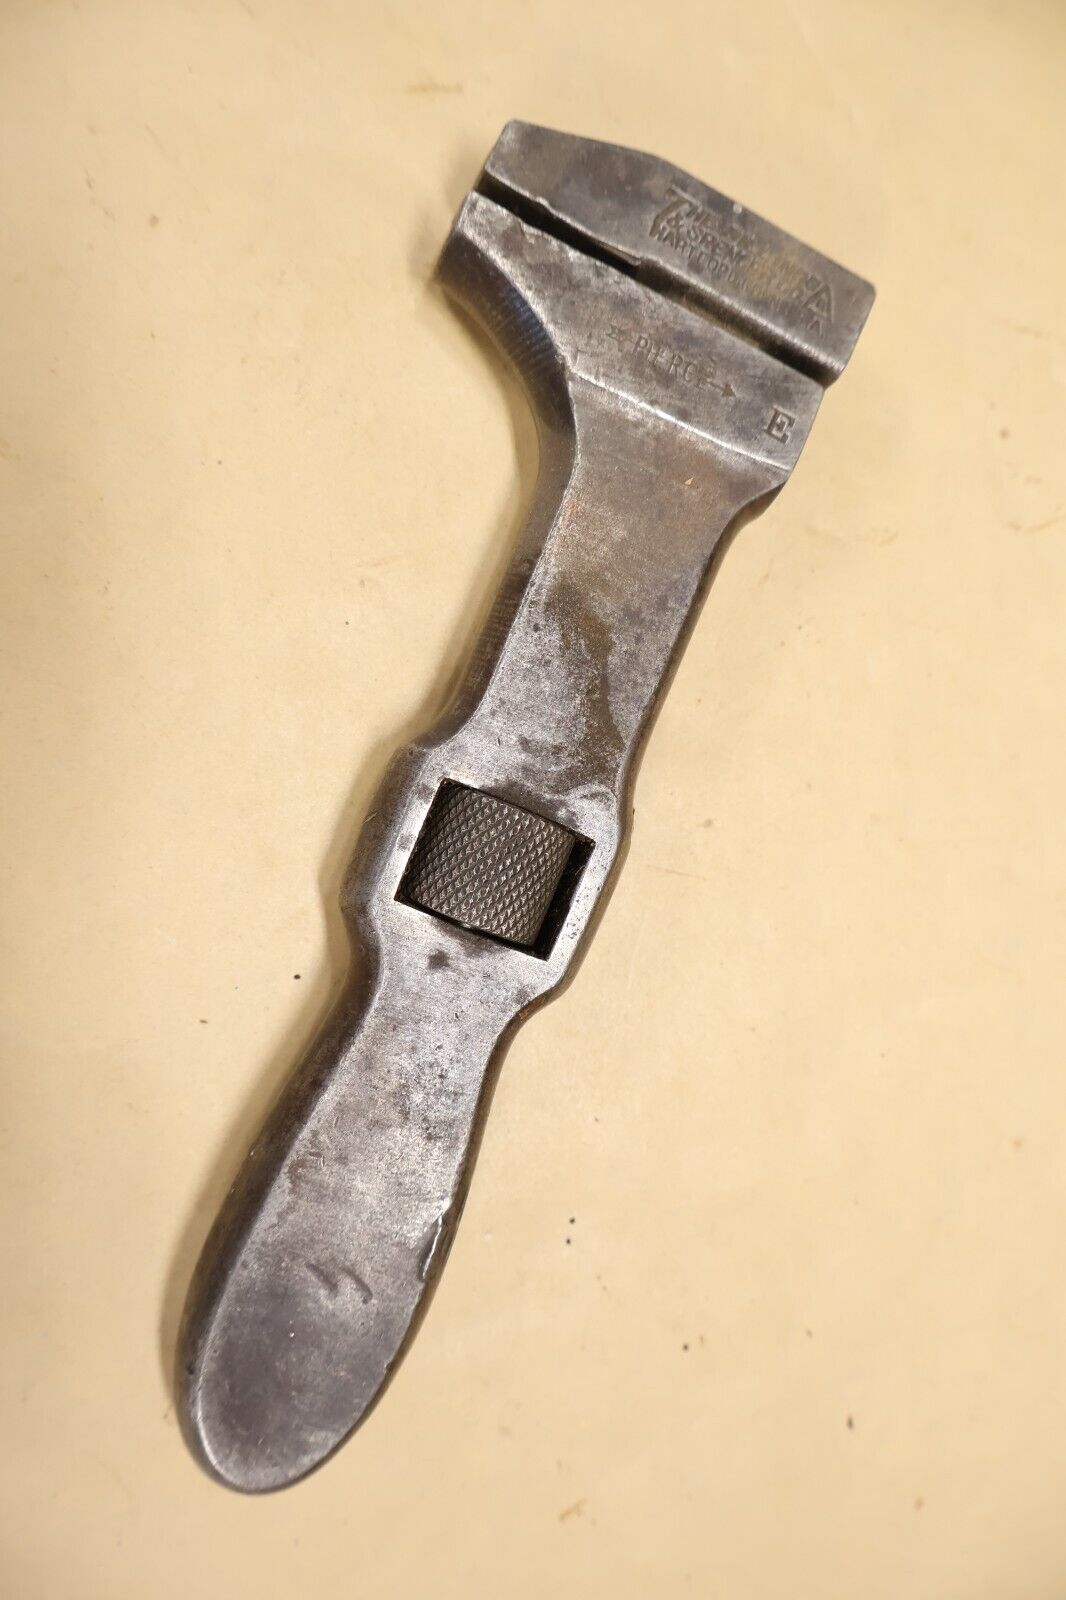 The Billings & Spencer Co Hartford Conn USA Adjustable Steel Wrench Spanner